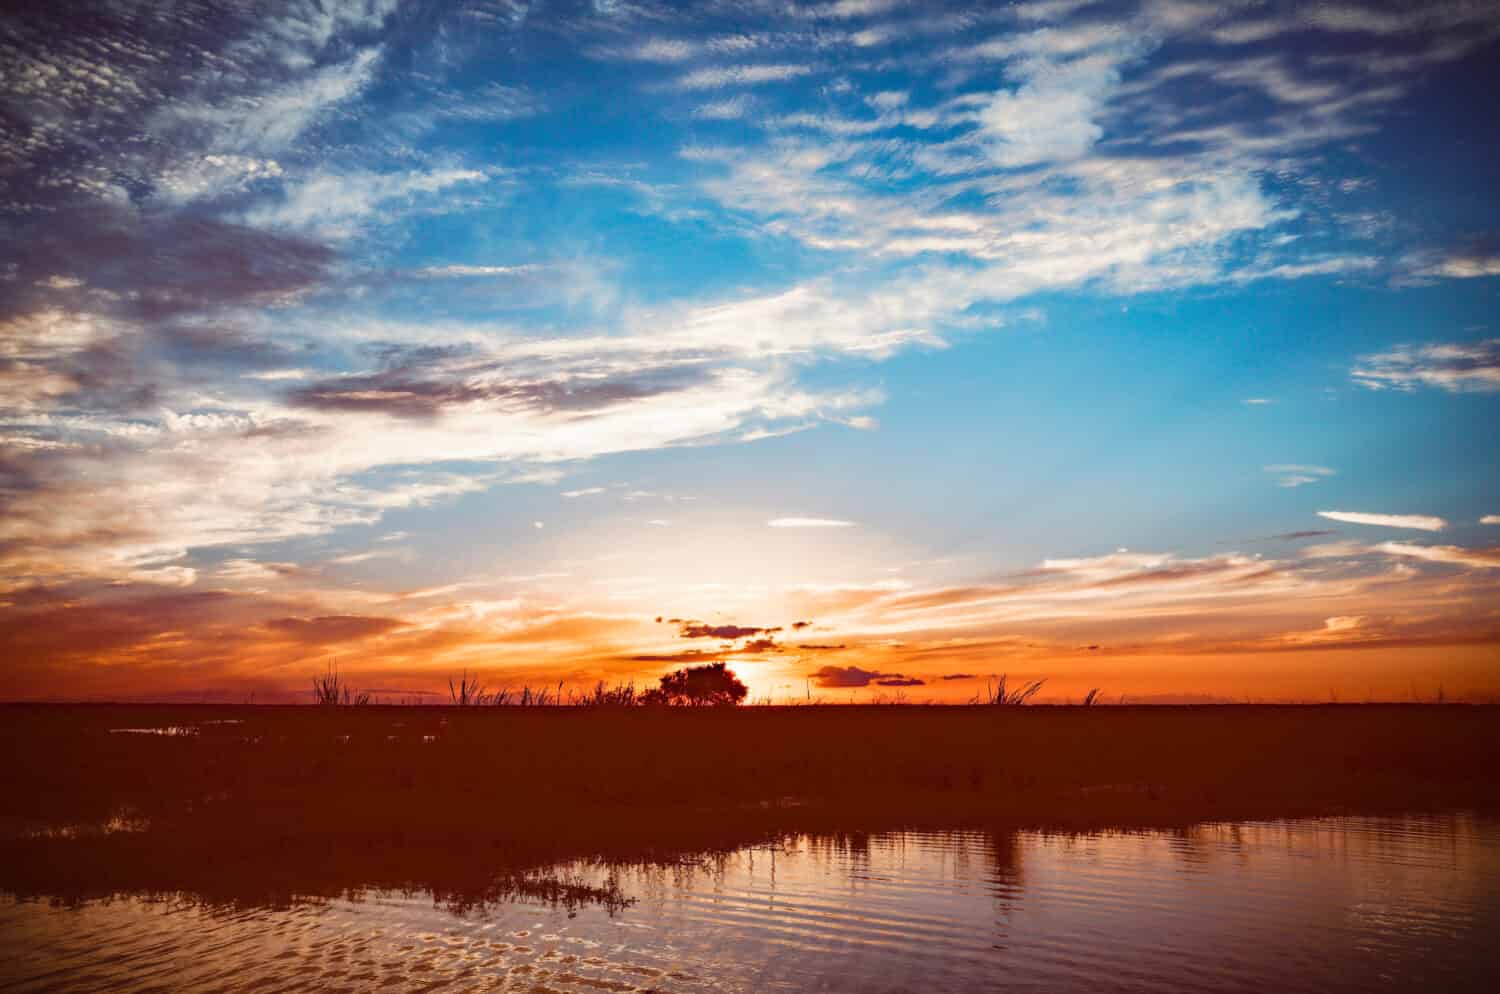 Sunset captured over Lake Istokpoga on the Florida peninsula